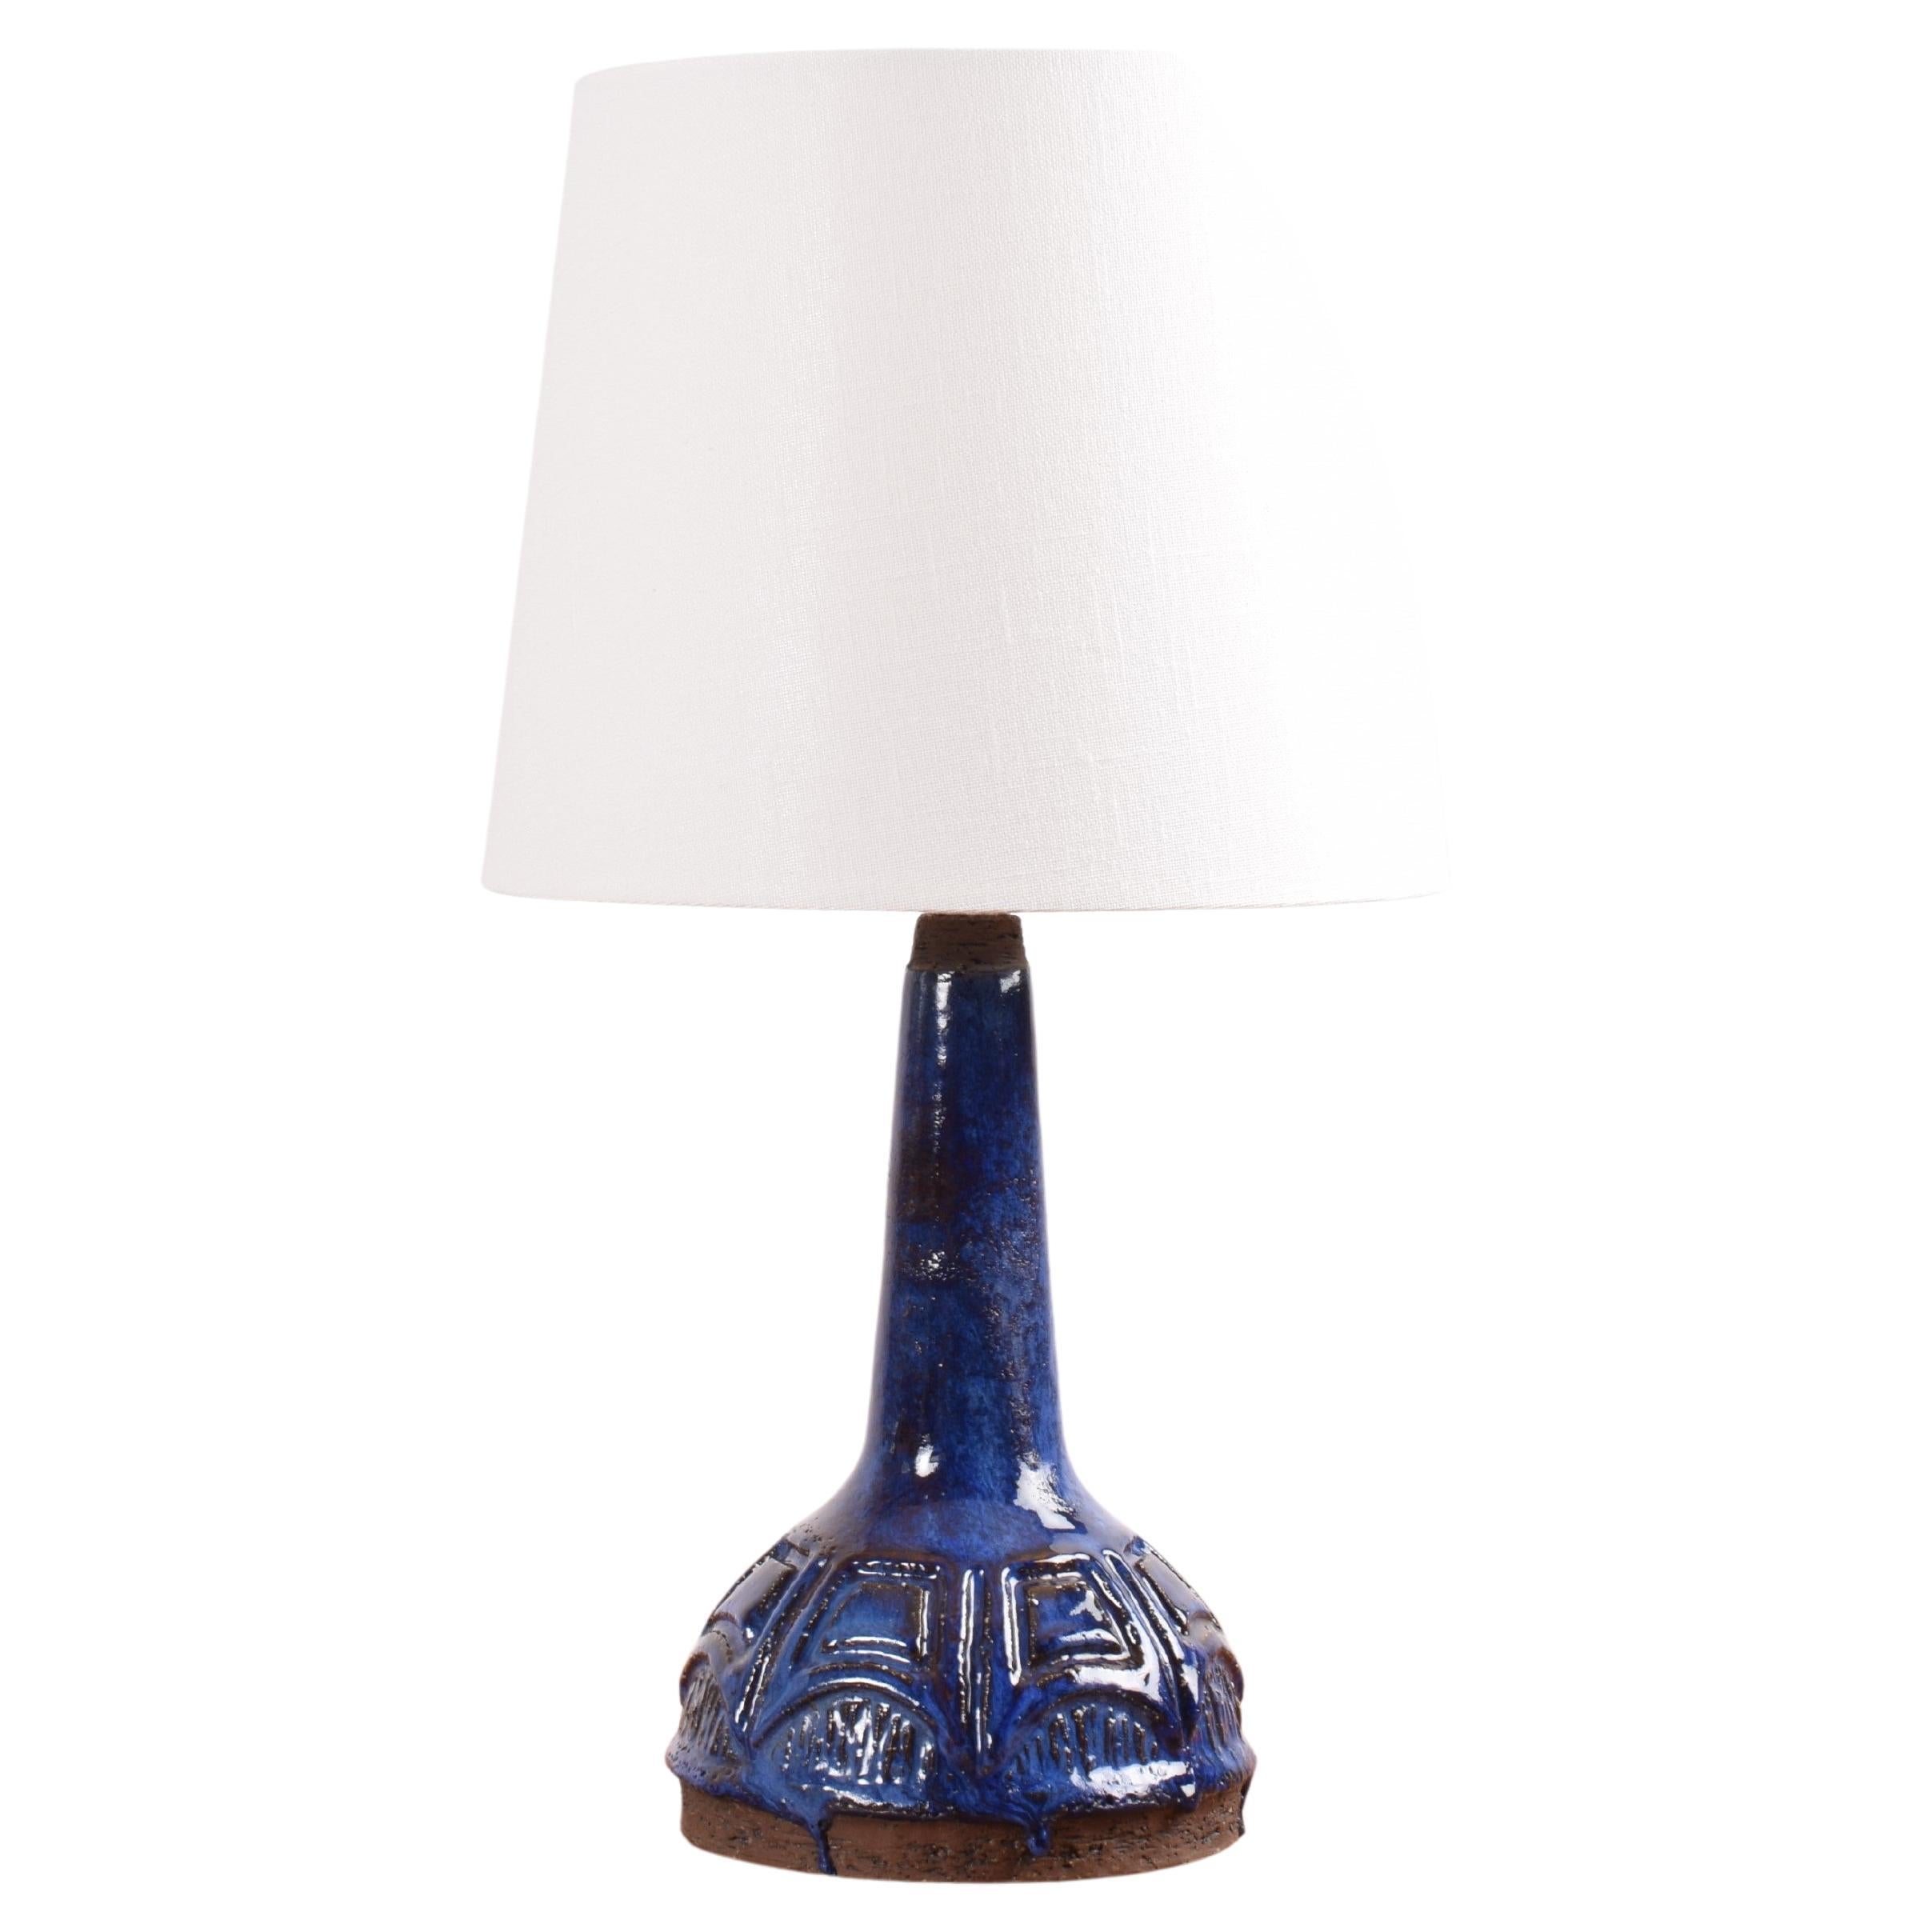 Danish Midcentury Ceramic Table Lamp Blue & Rust Brown Sejer Unic Studio Pottery For Sale